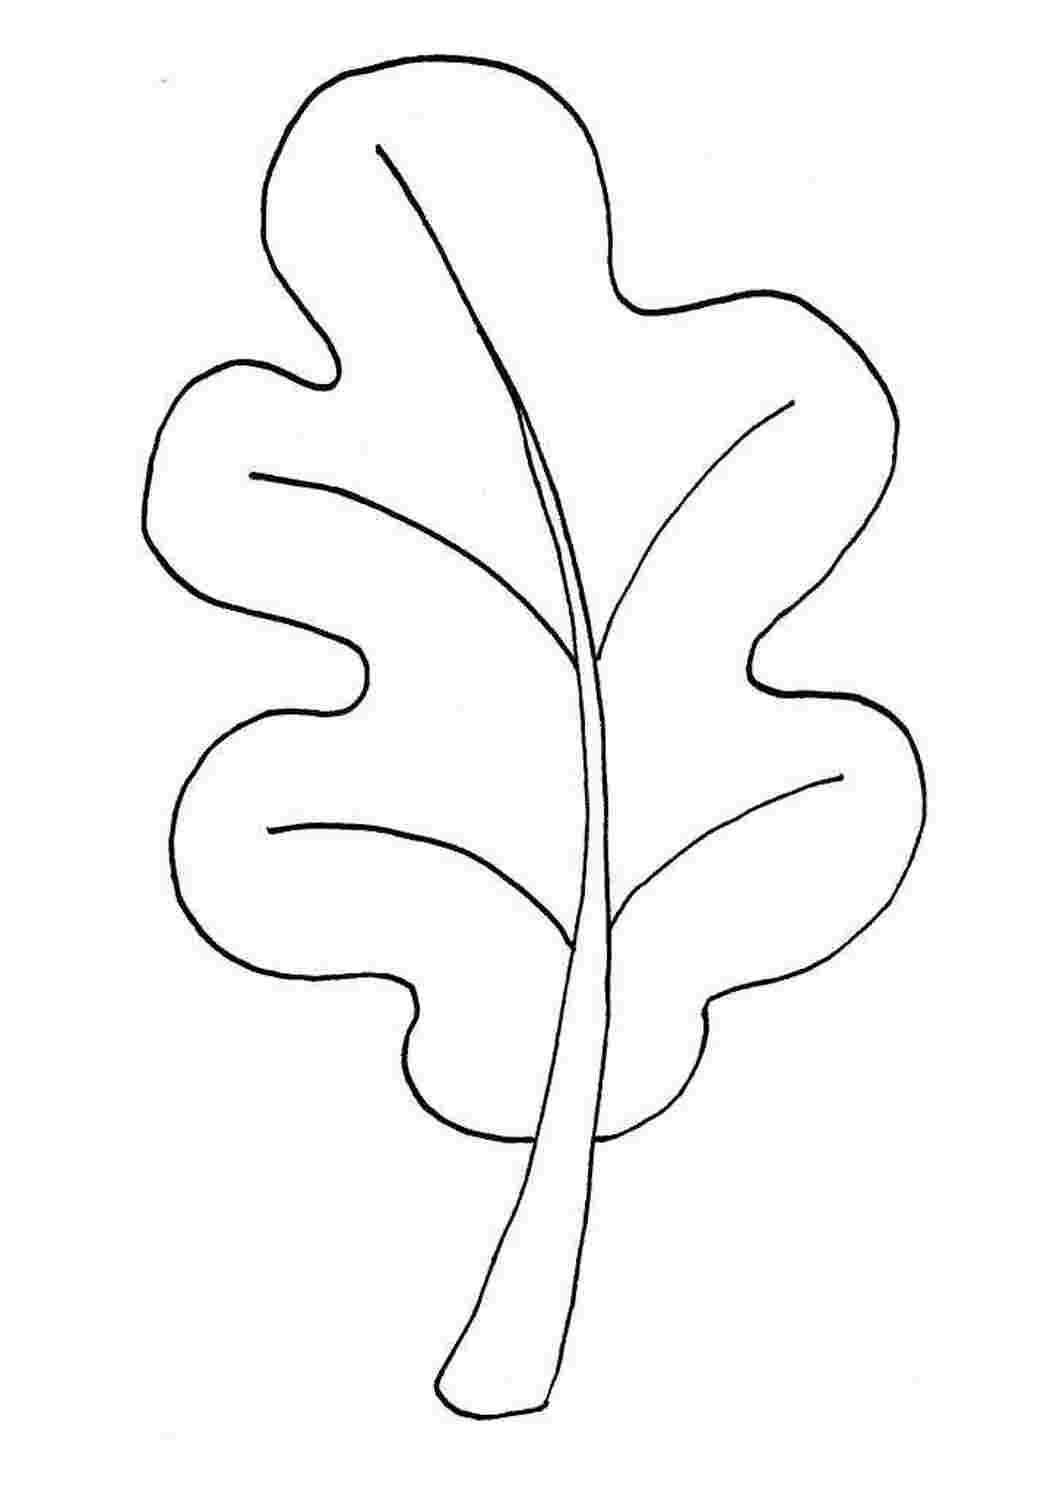 Раскраски лист дуба для поделок Раскраски Листья деревьев 